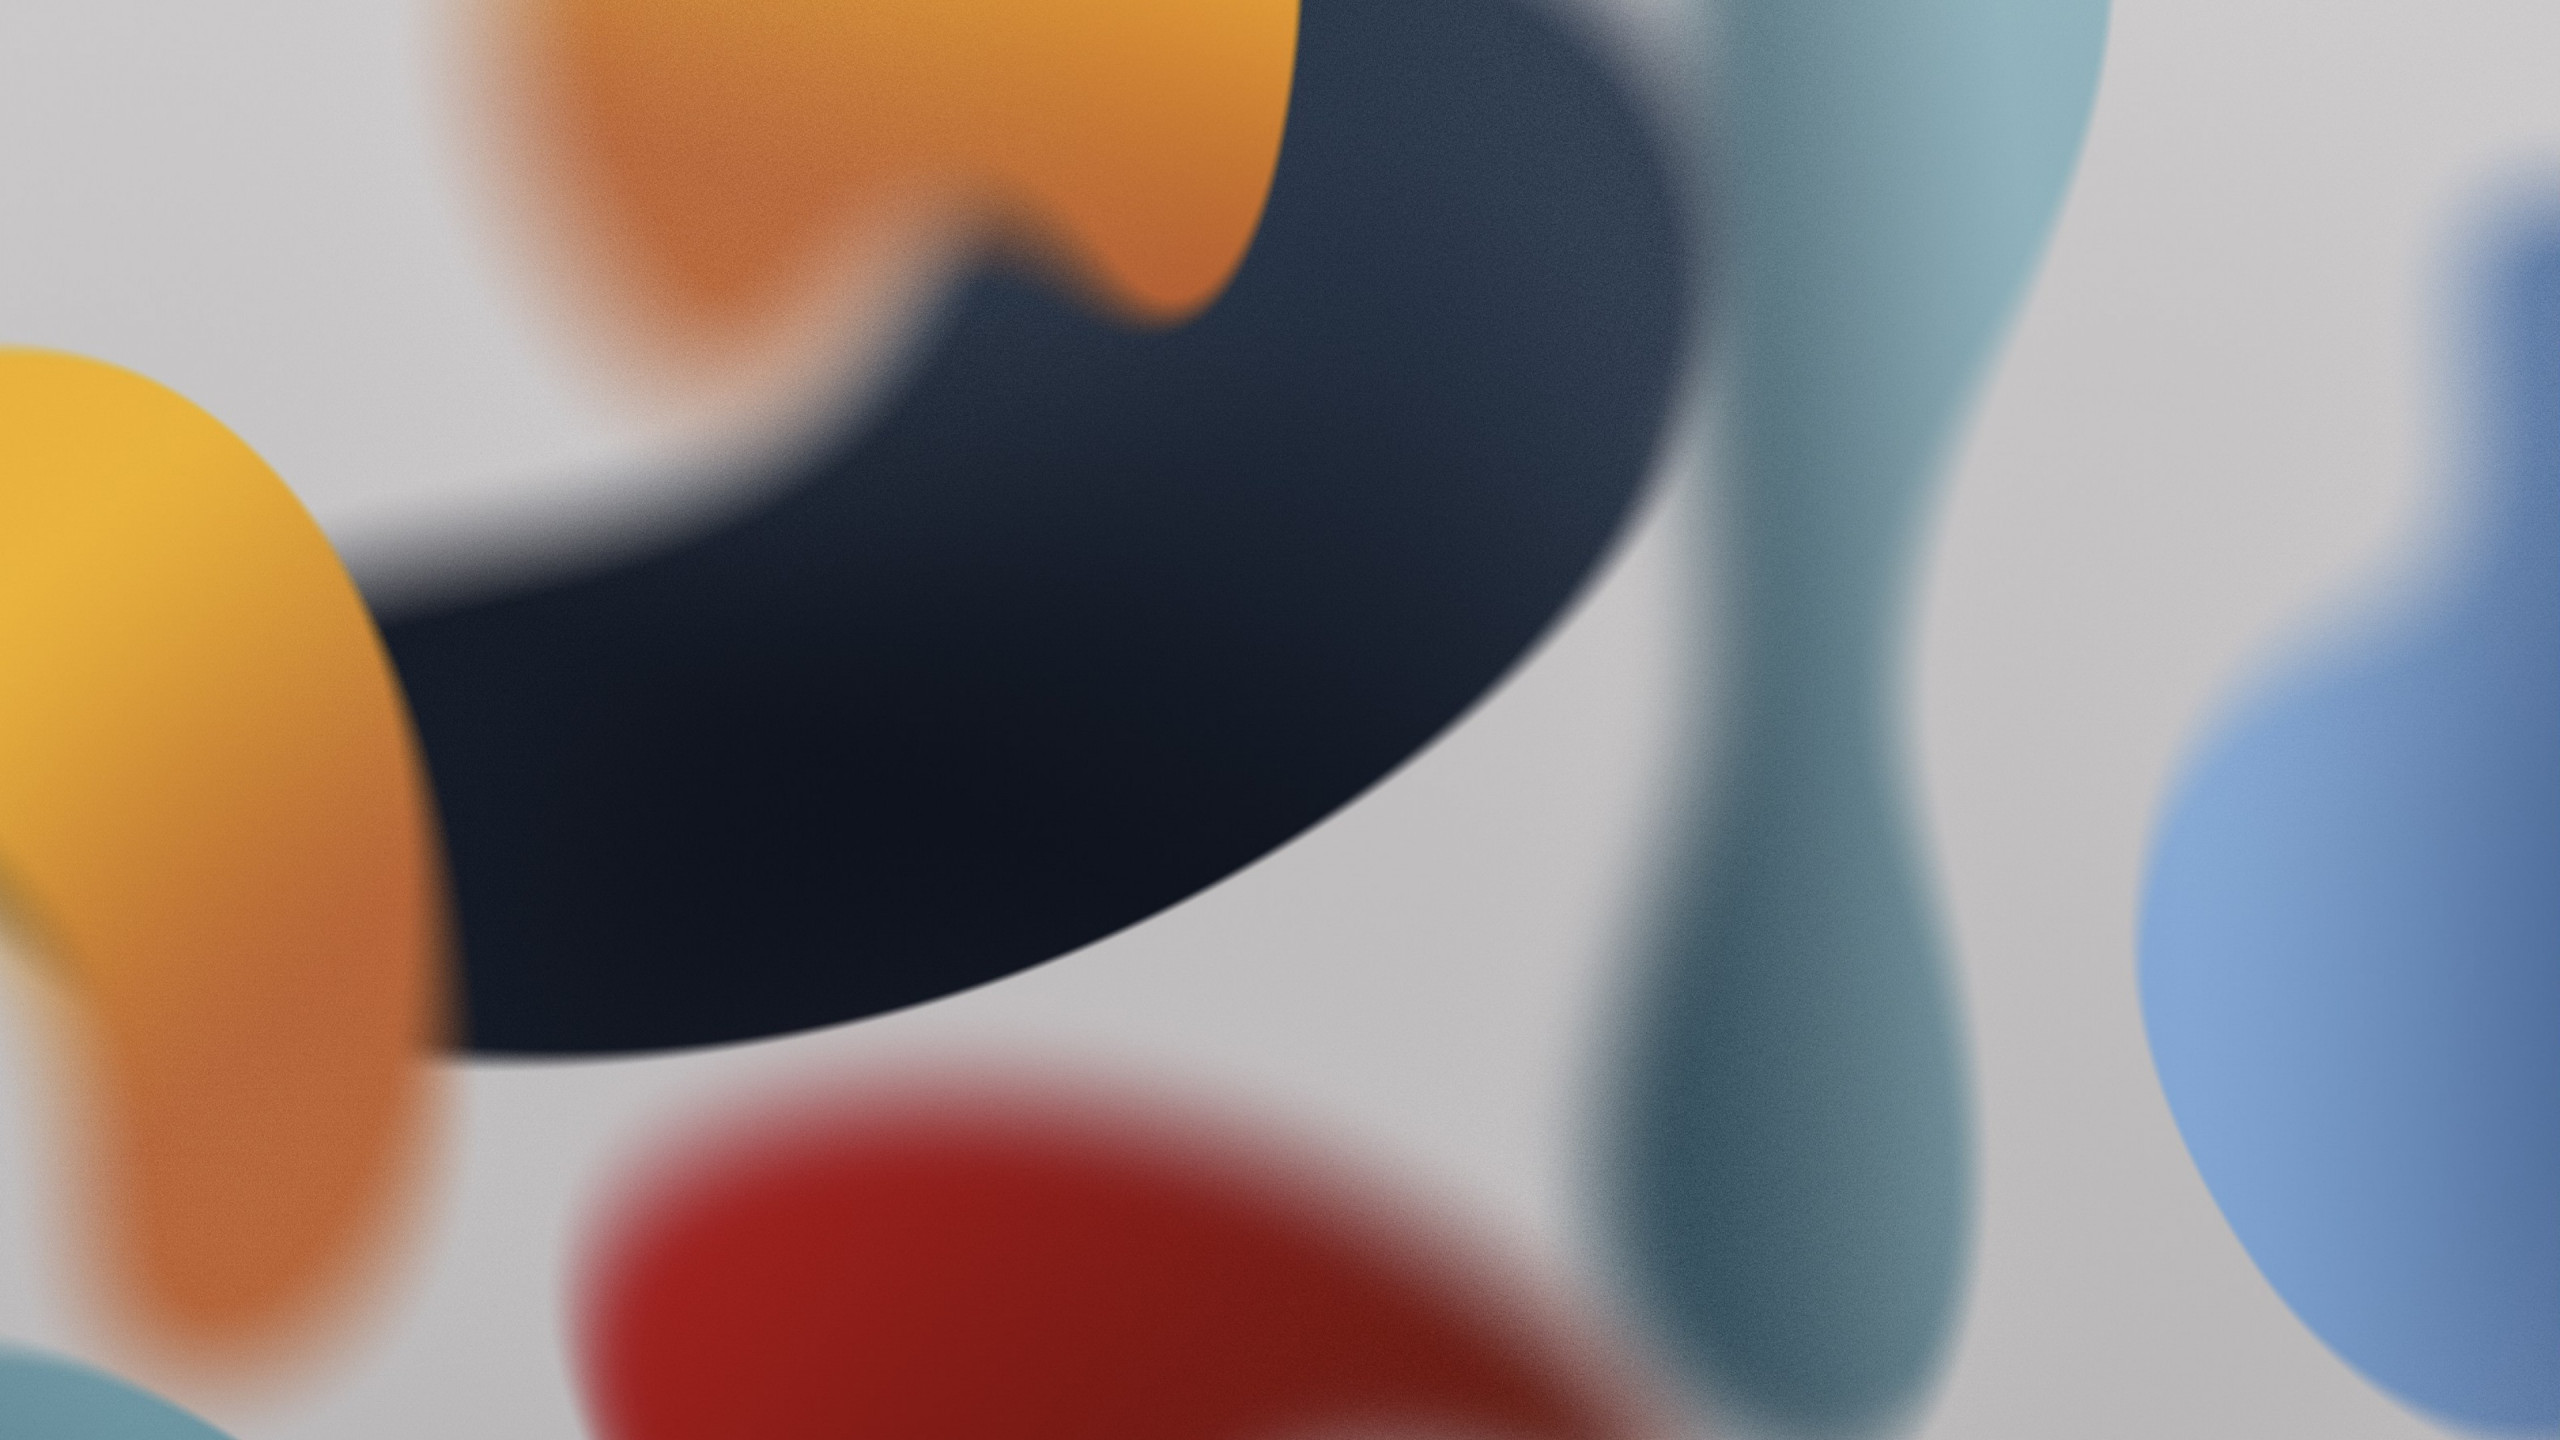 Abstract iOS 15 wallpaper 2560x1440